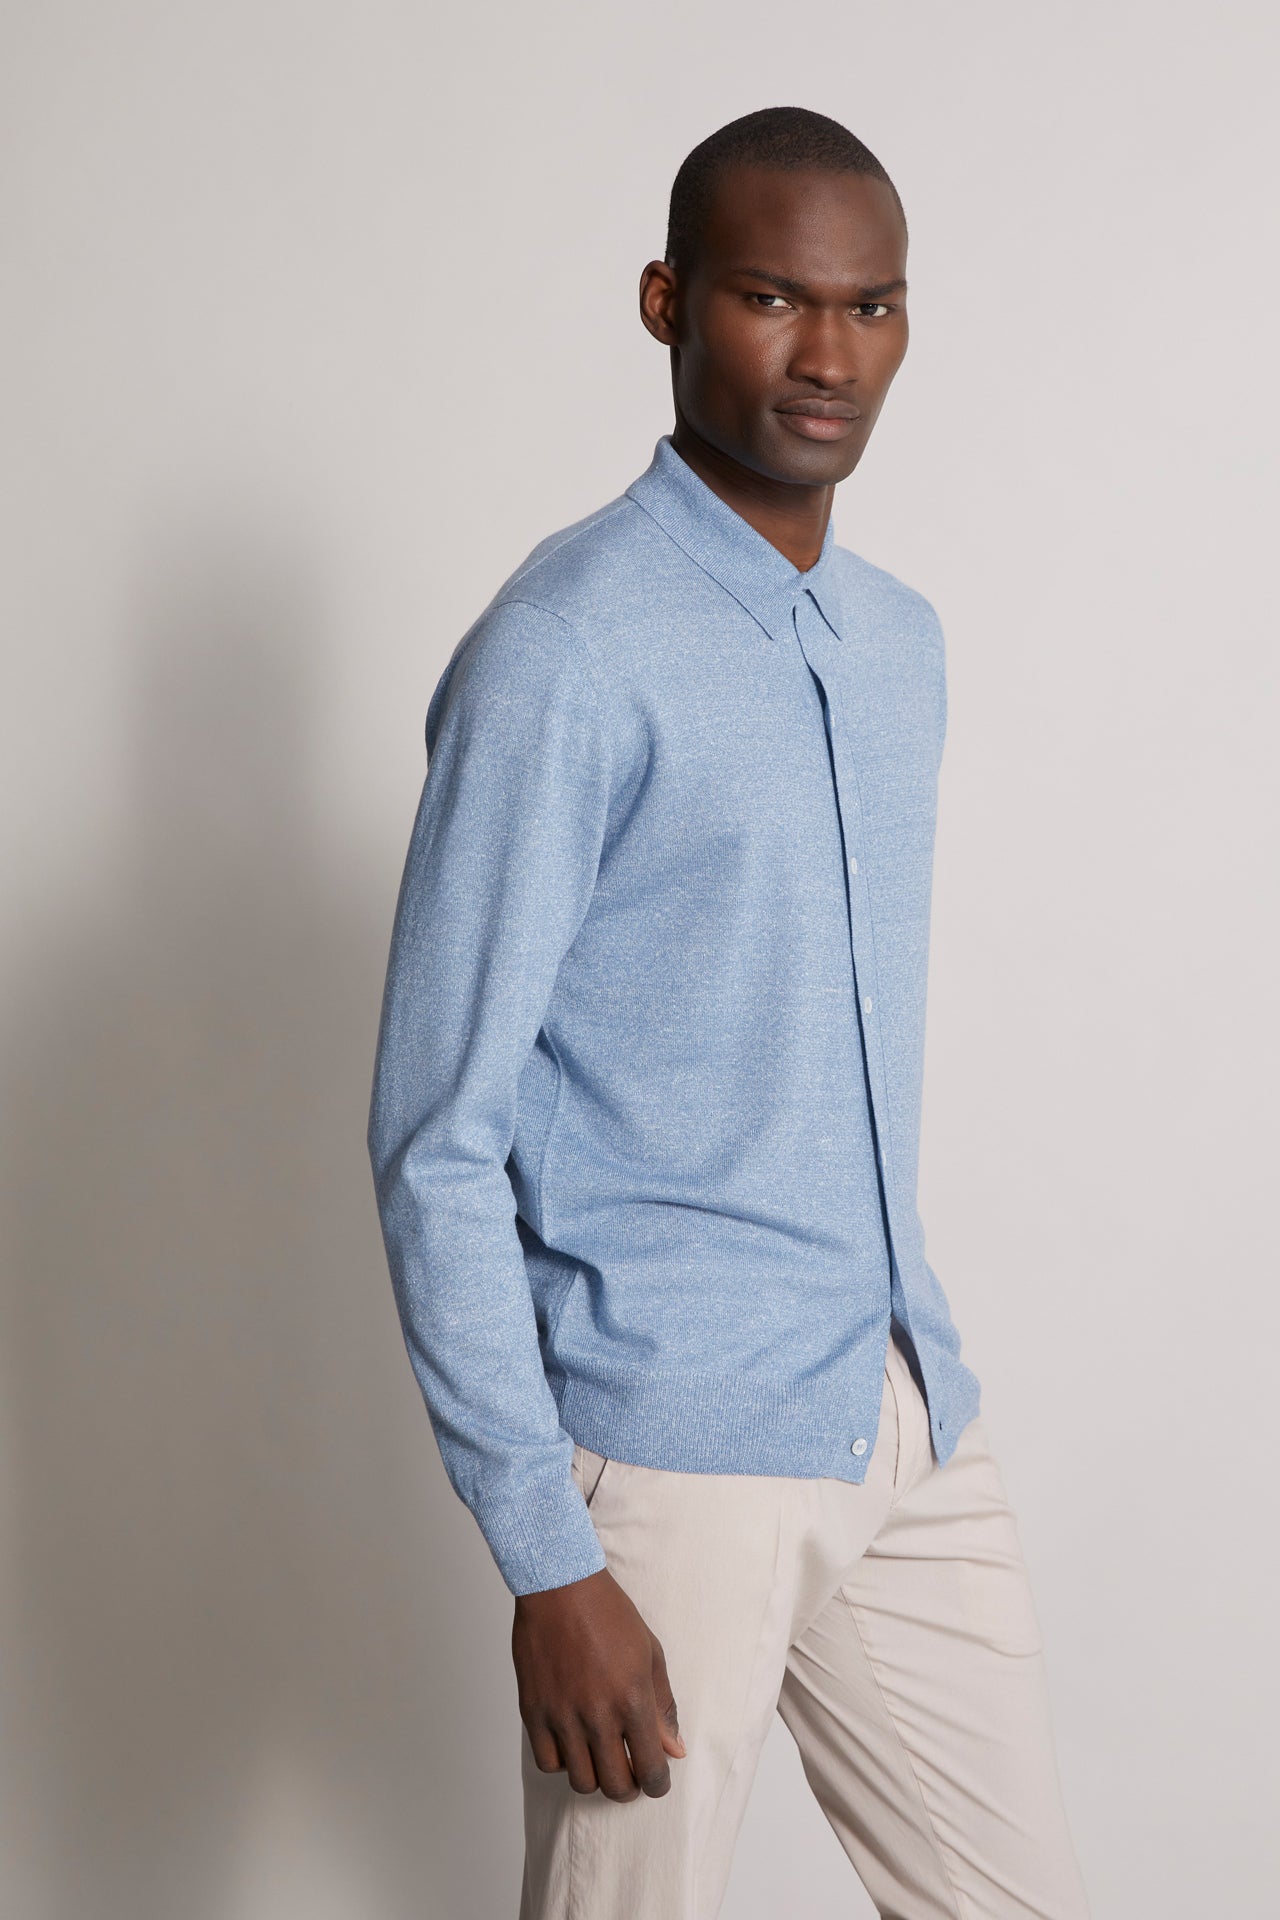 Knitted Shirt in cashmere linen blend